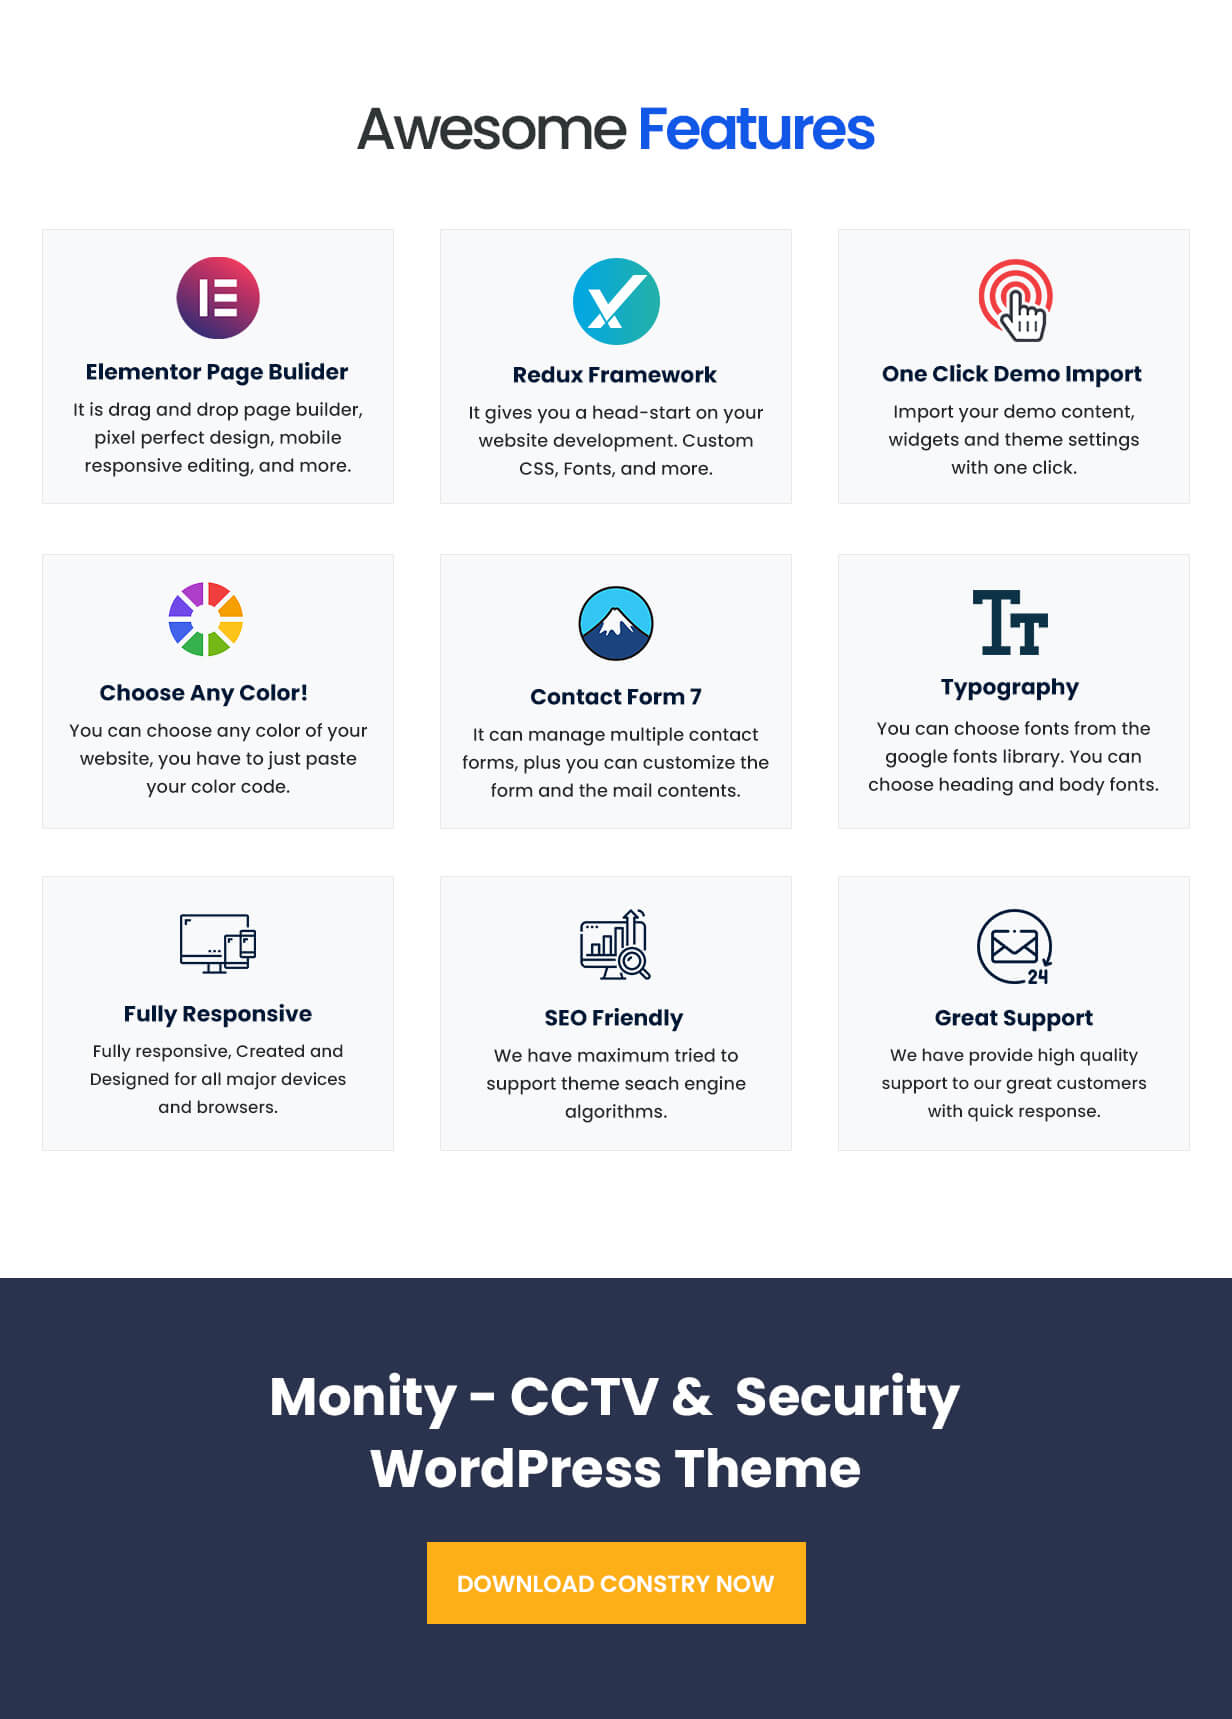 CCTV & Security WordPress Theme